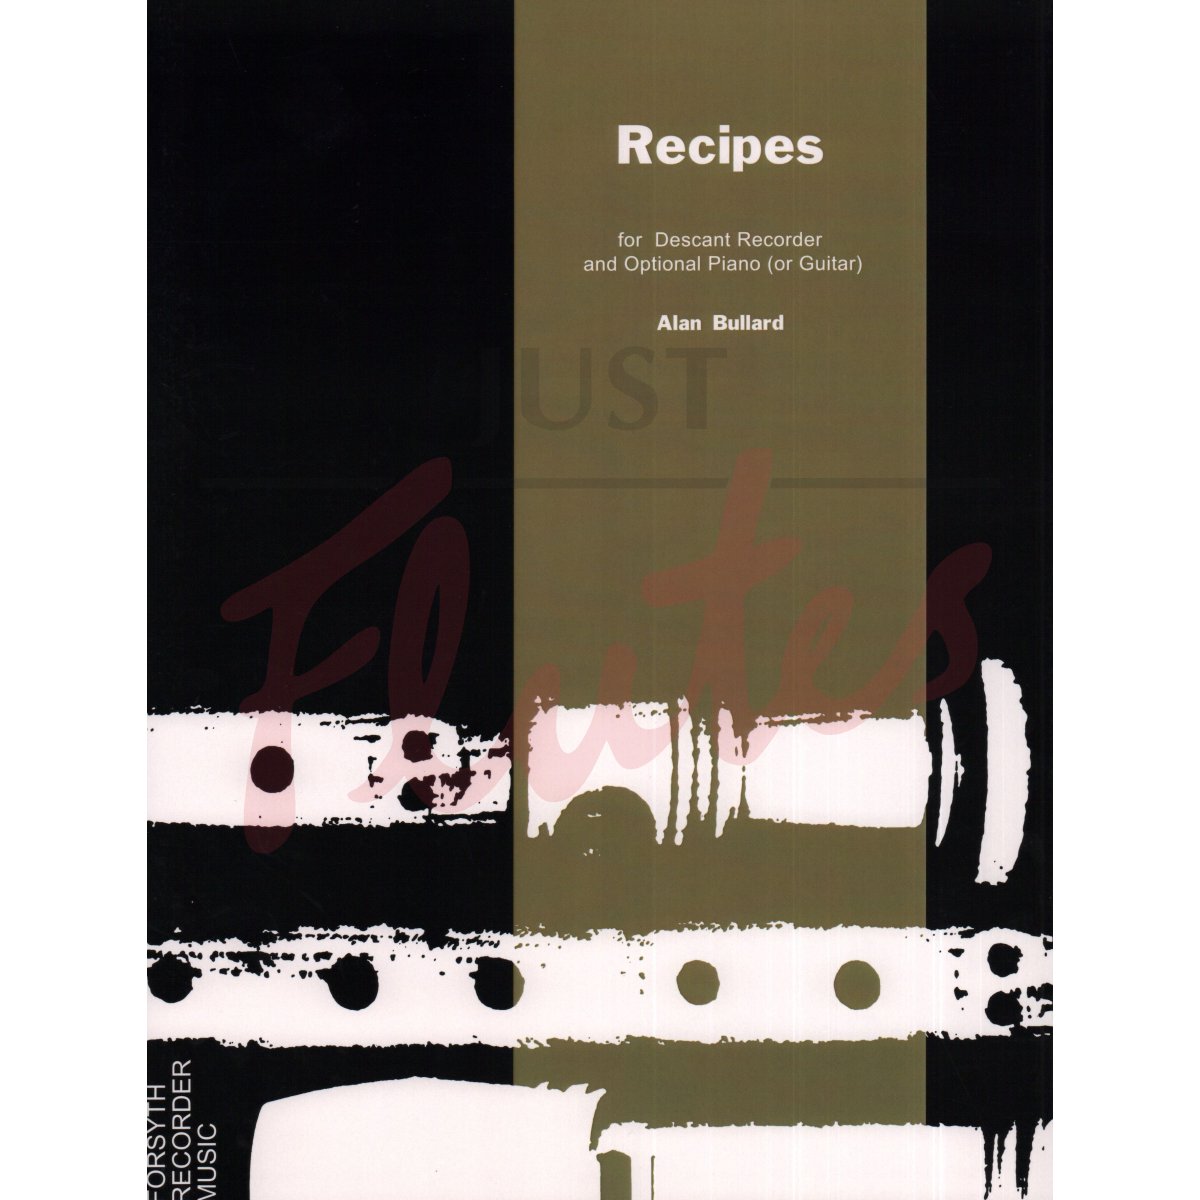 Recipes for Descant Recorder and optional Piano/Guitar